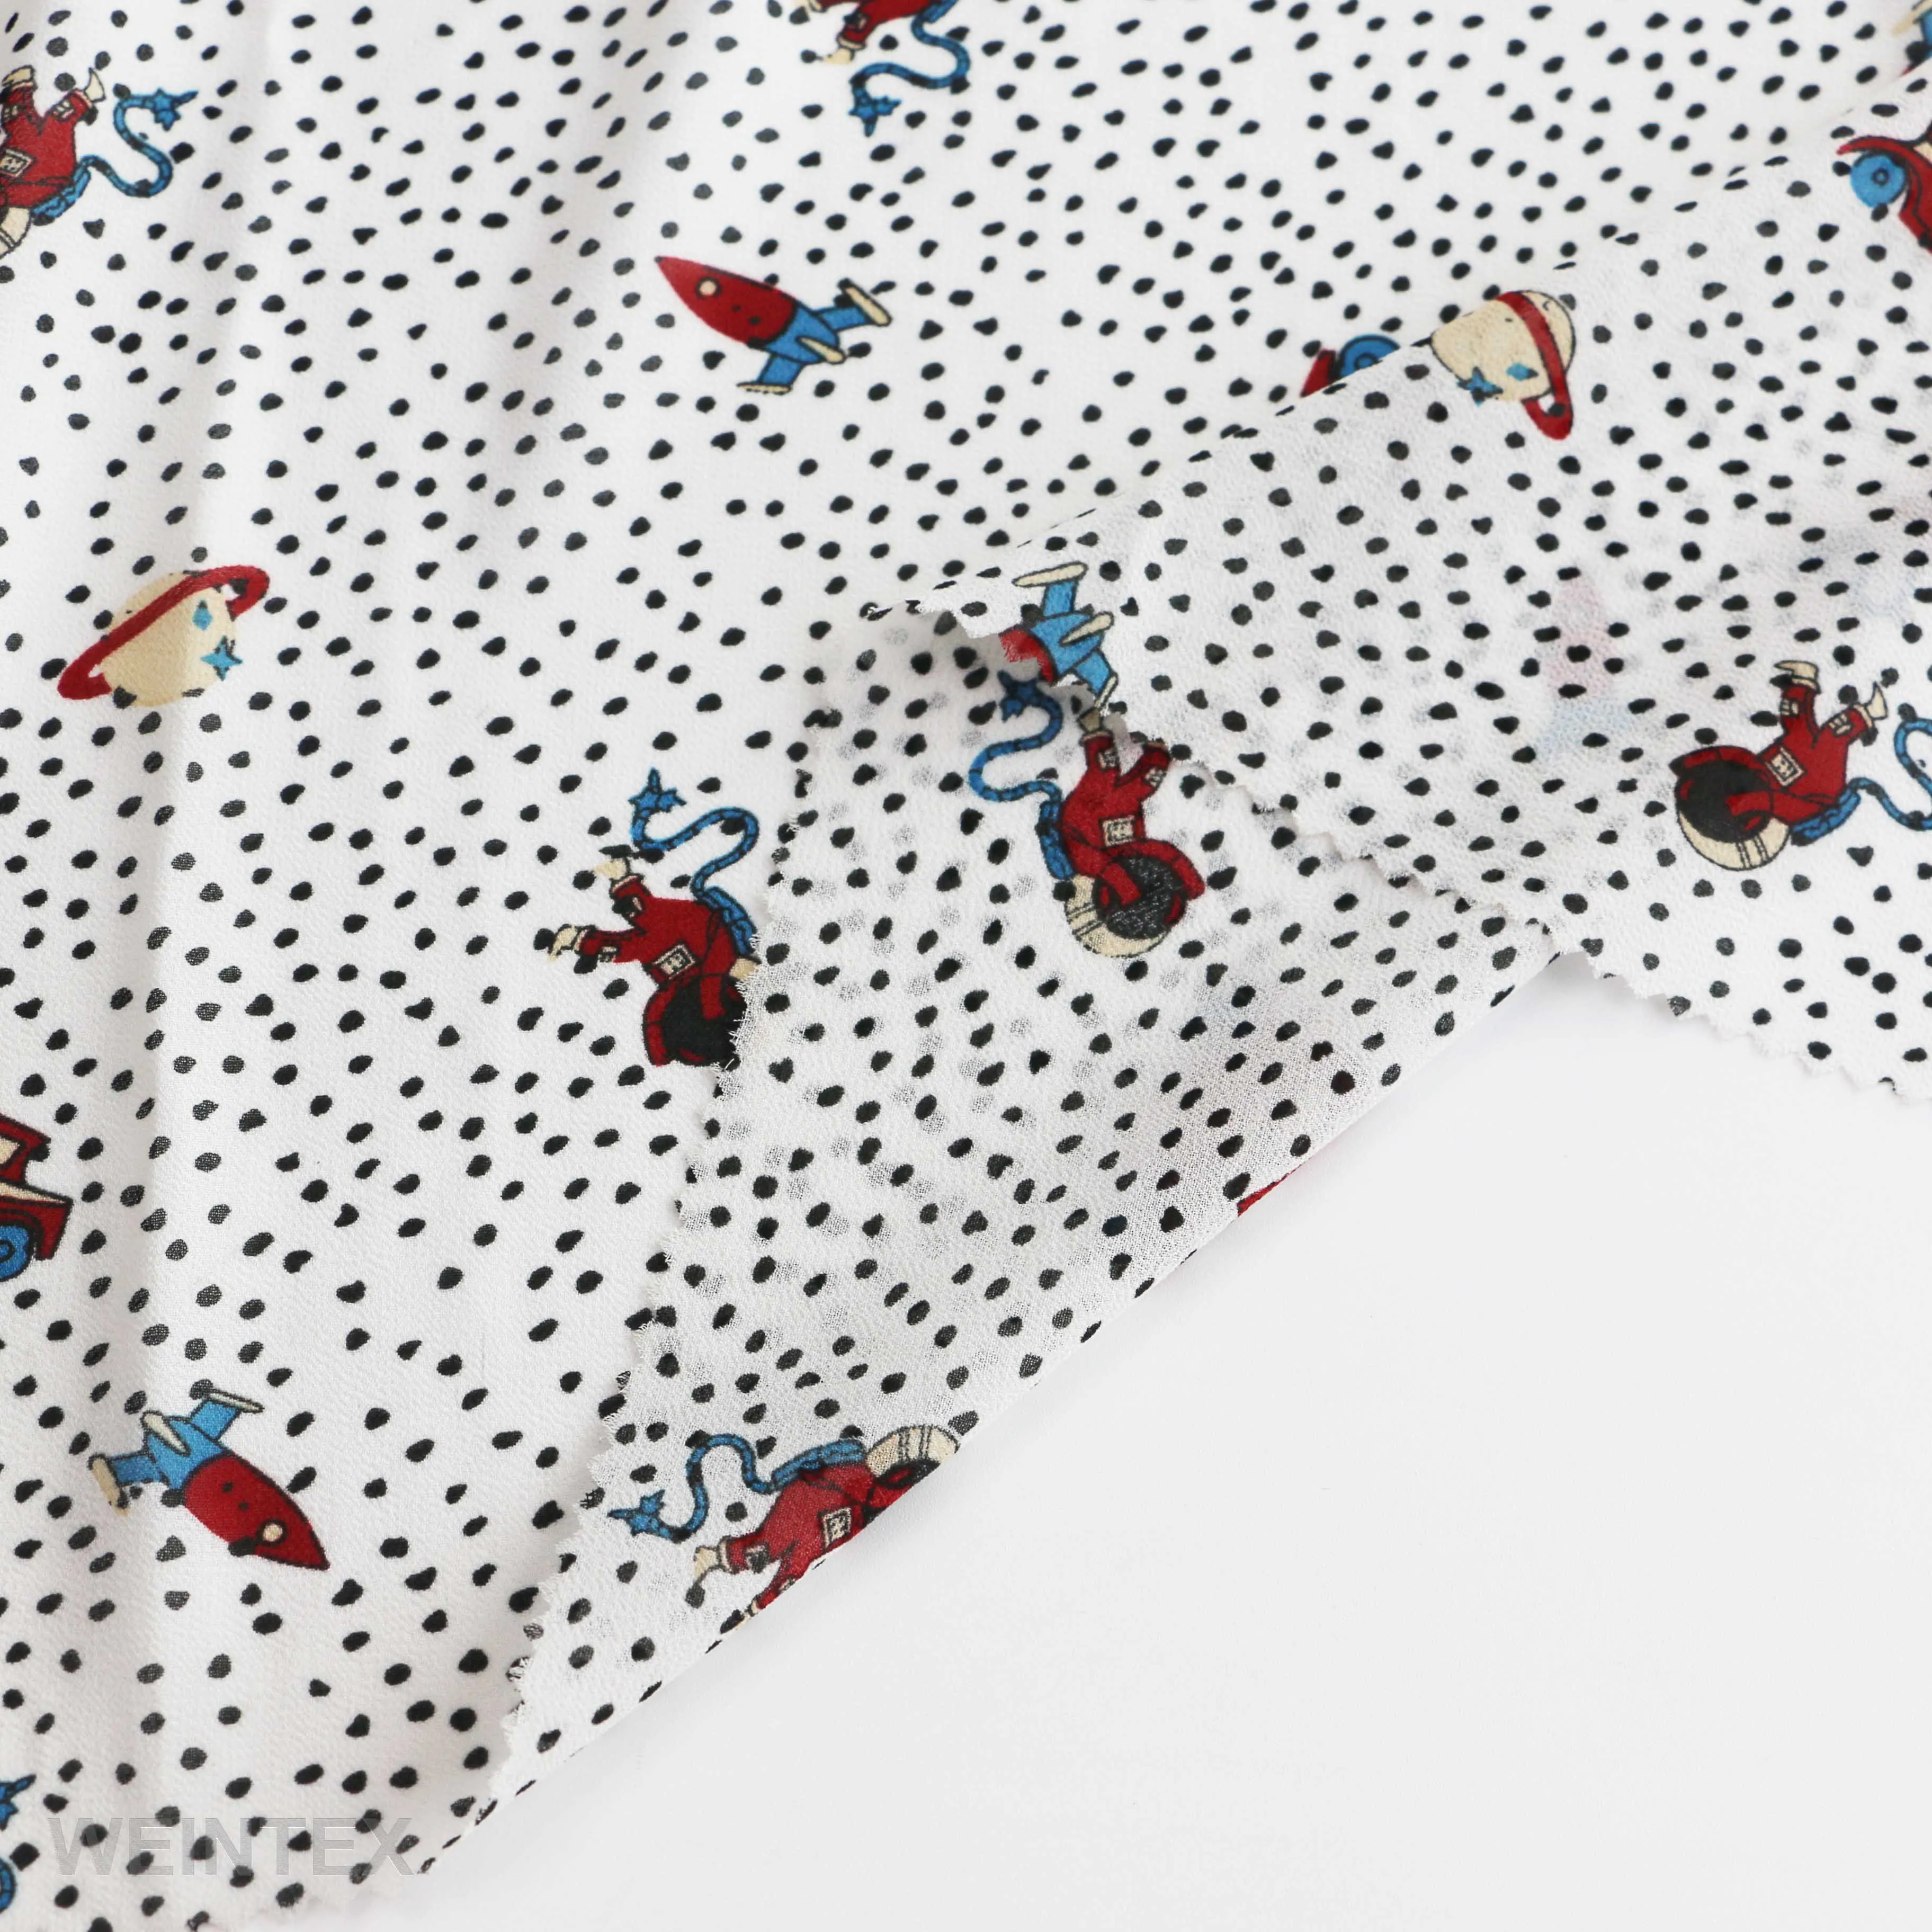 
Polka dot baby prints wholesale fabric breathable chiffon for garment 